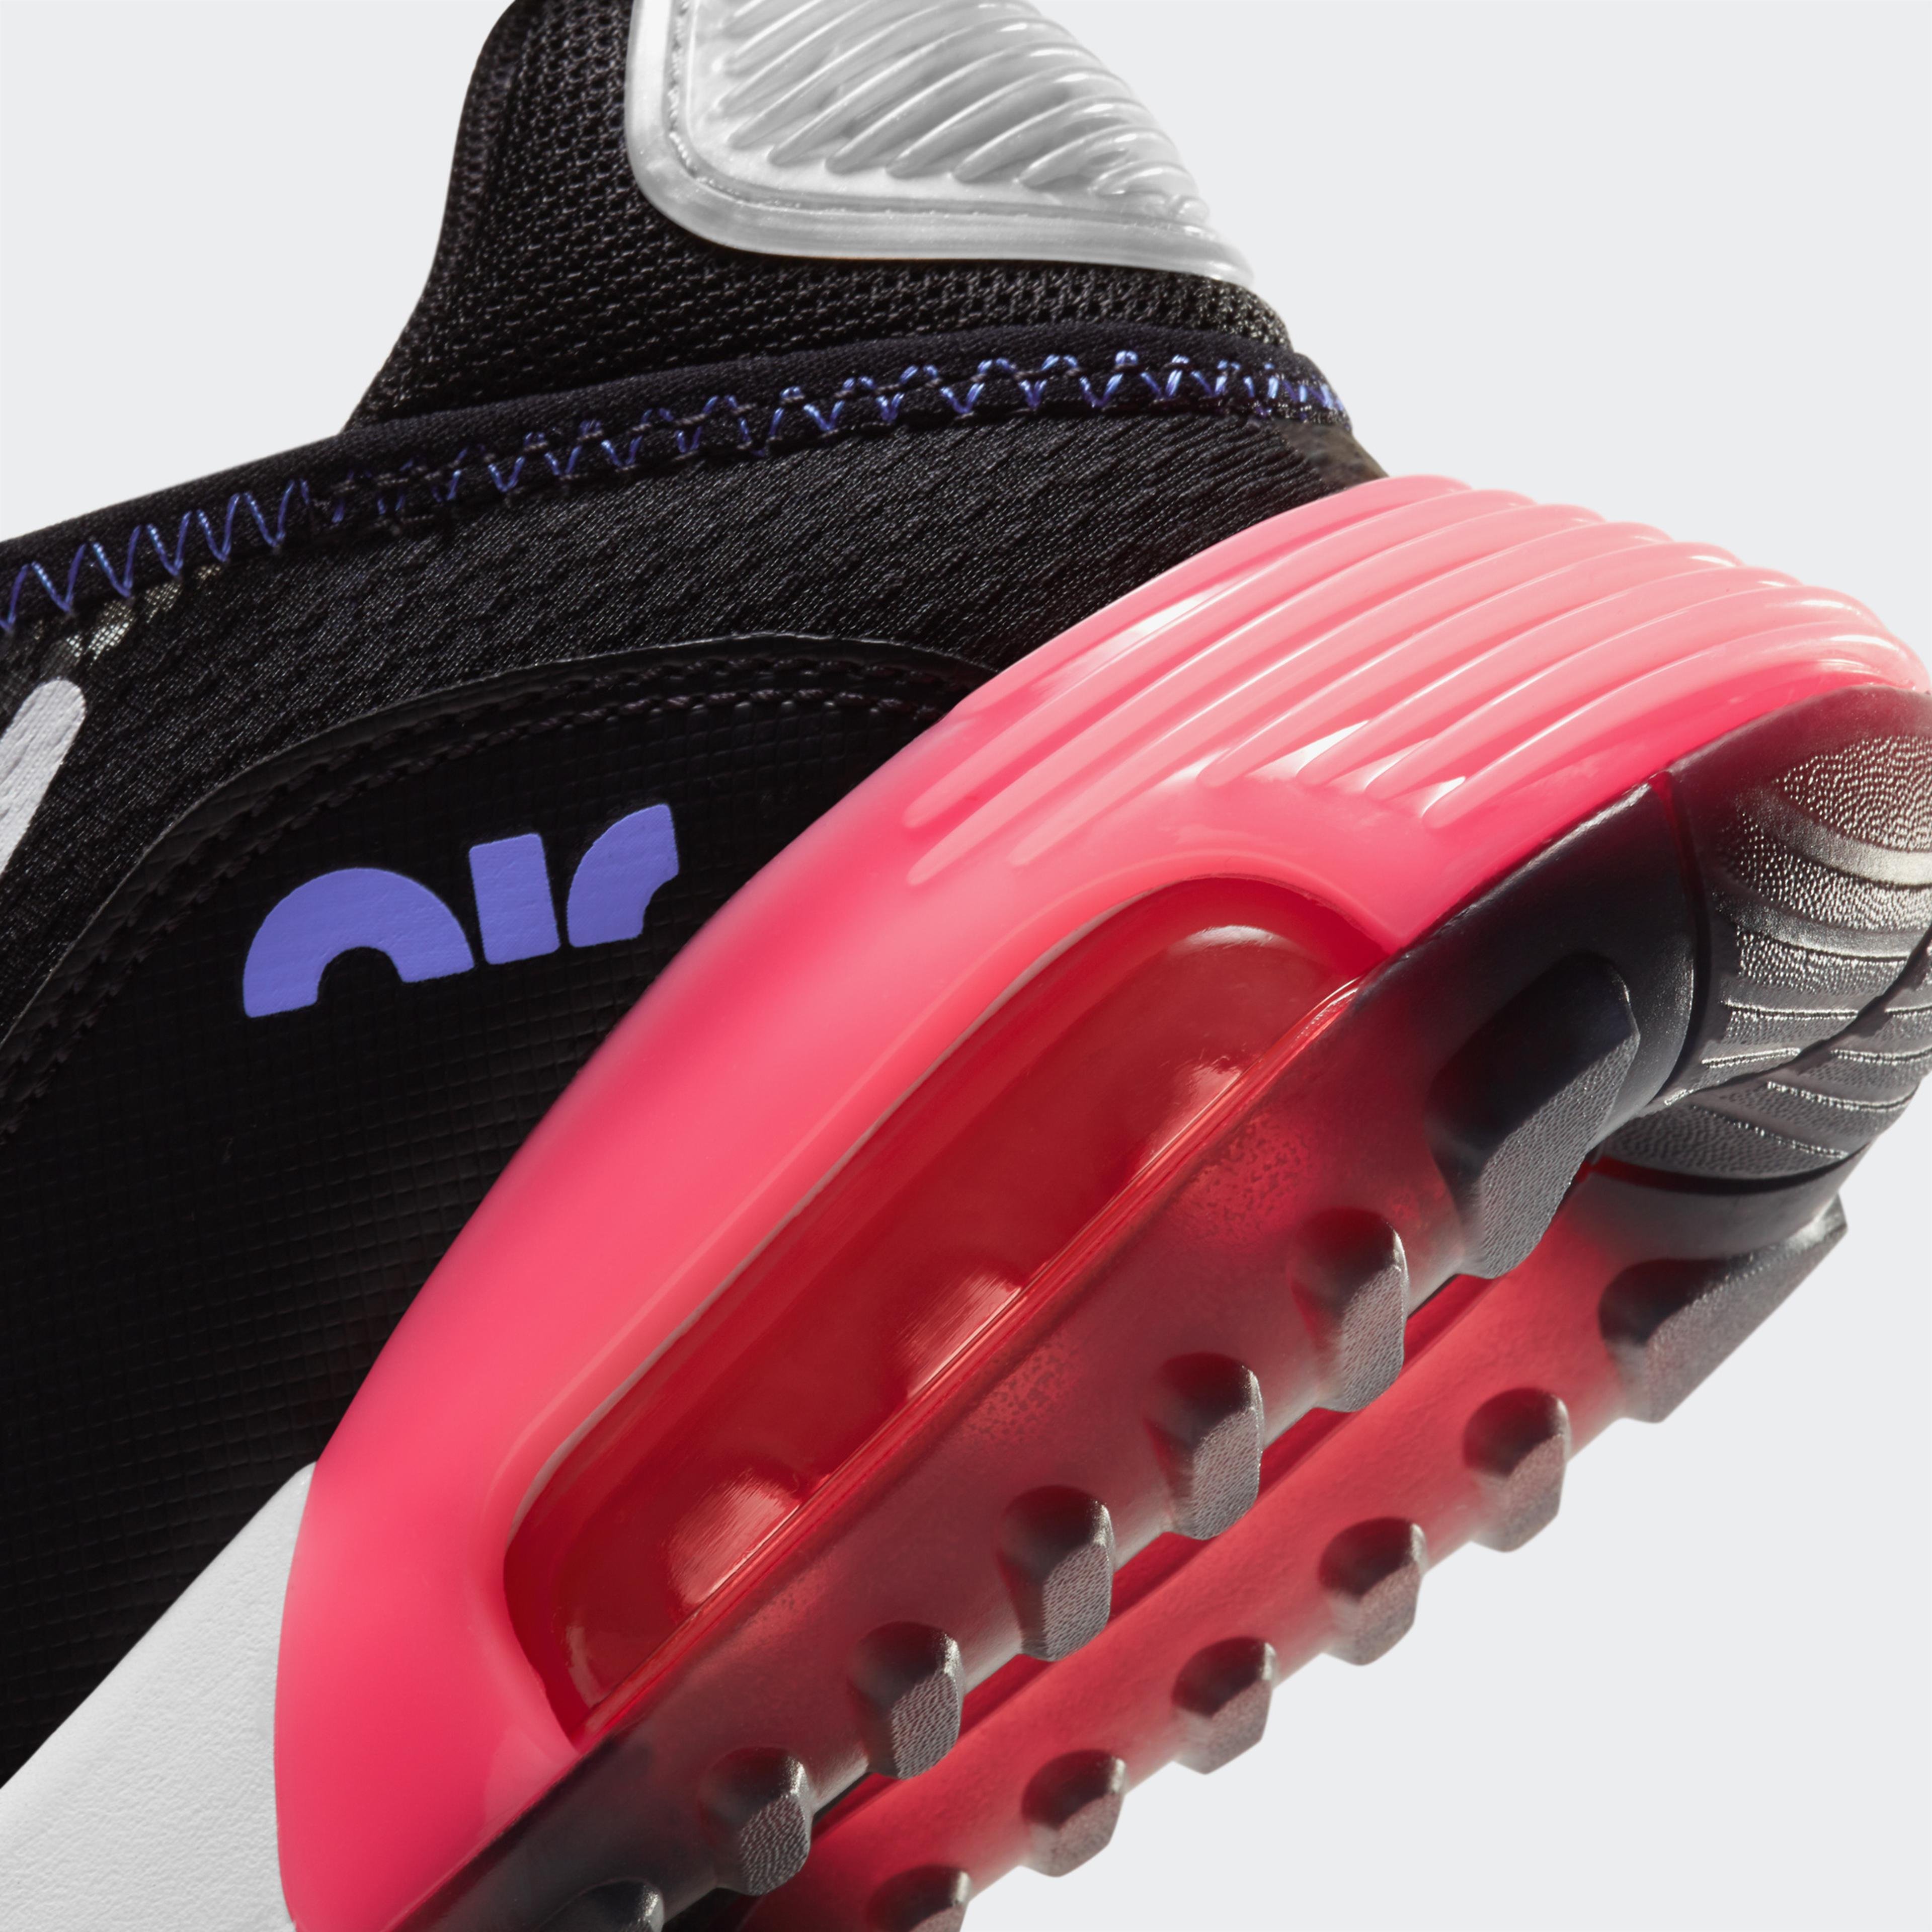 Nike Air Max 2090 Gs Kadın Siyah Spor Ayakkabı